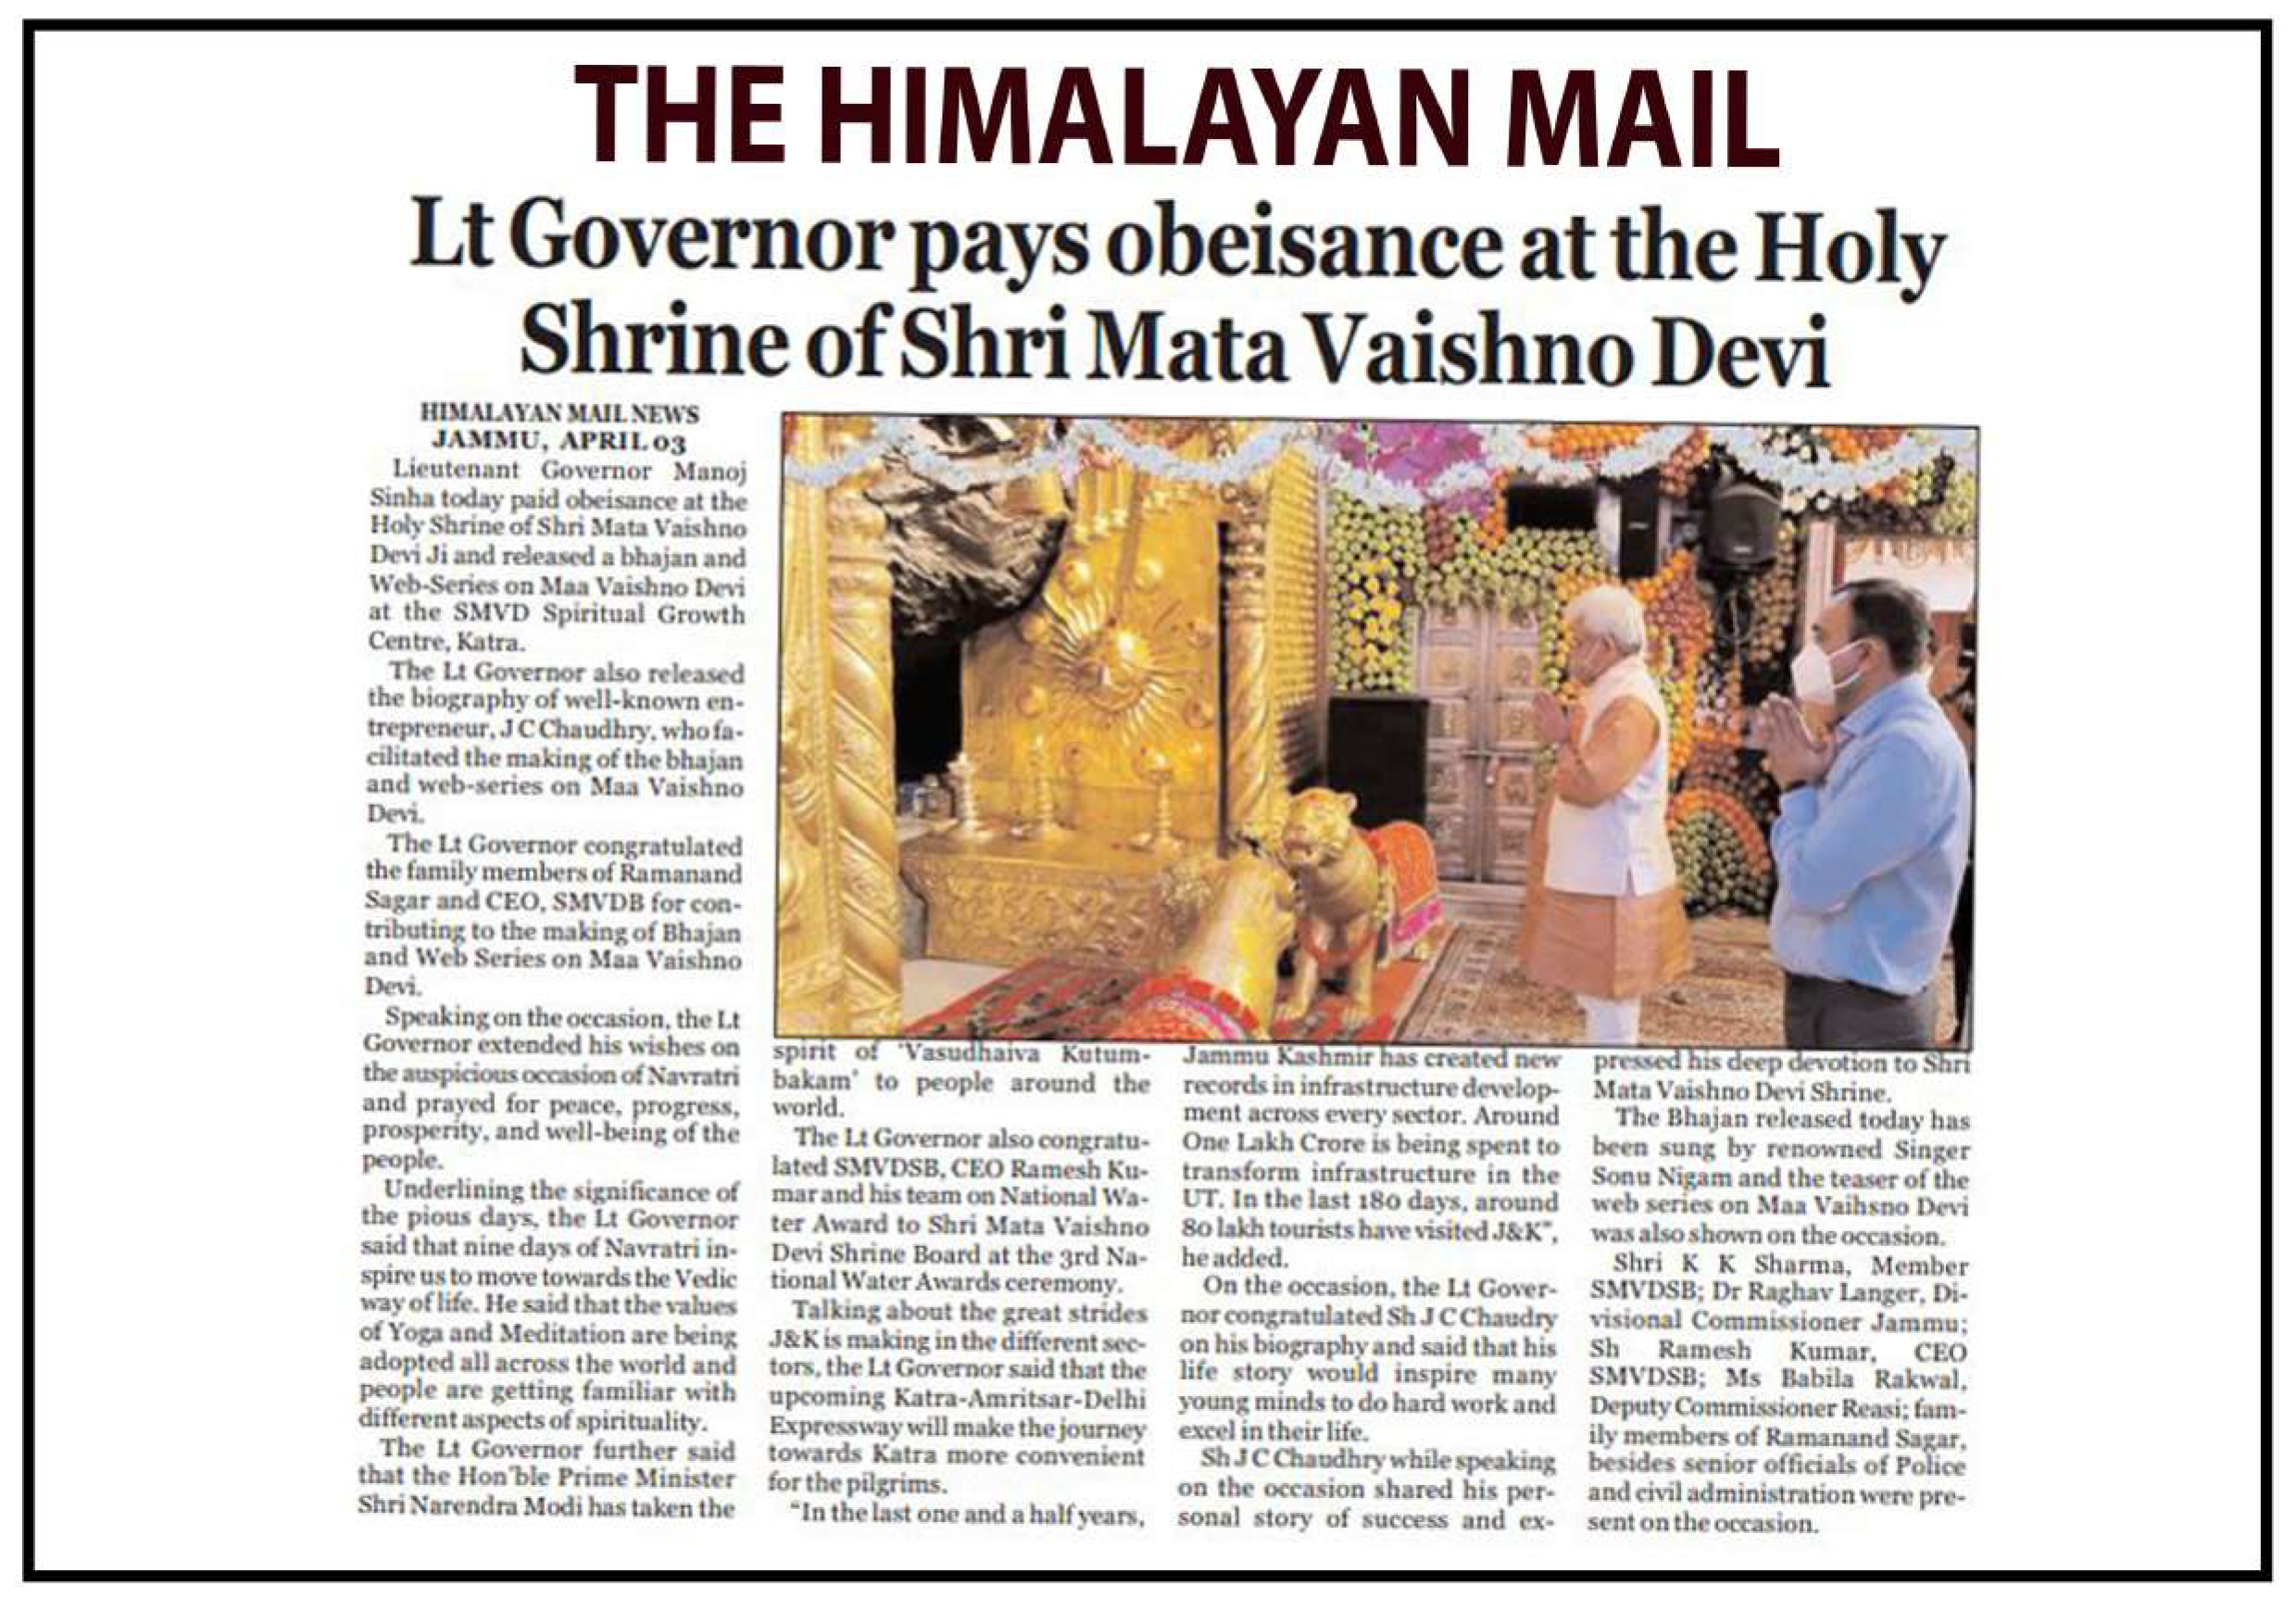 LG Manoj Sinha pays obeisance at shrine of Maa Vaishno Devi-- Himalayan Mail